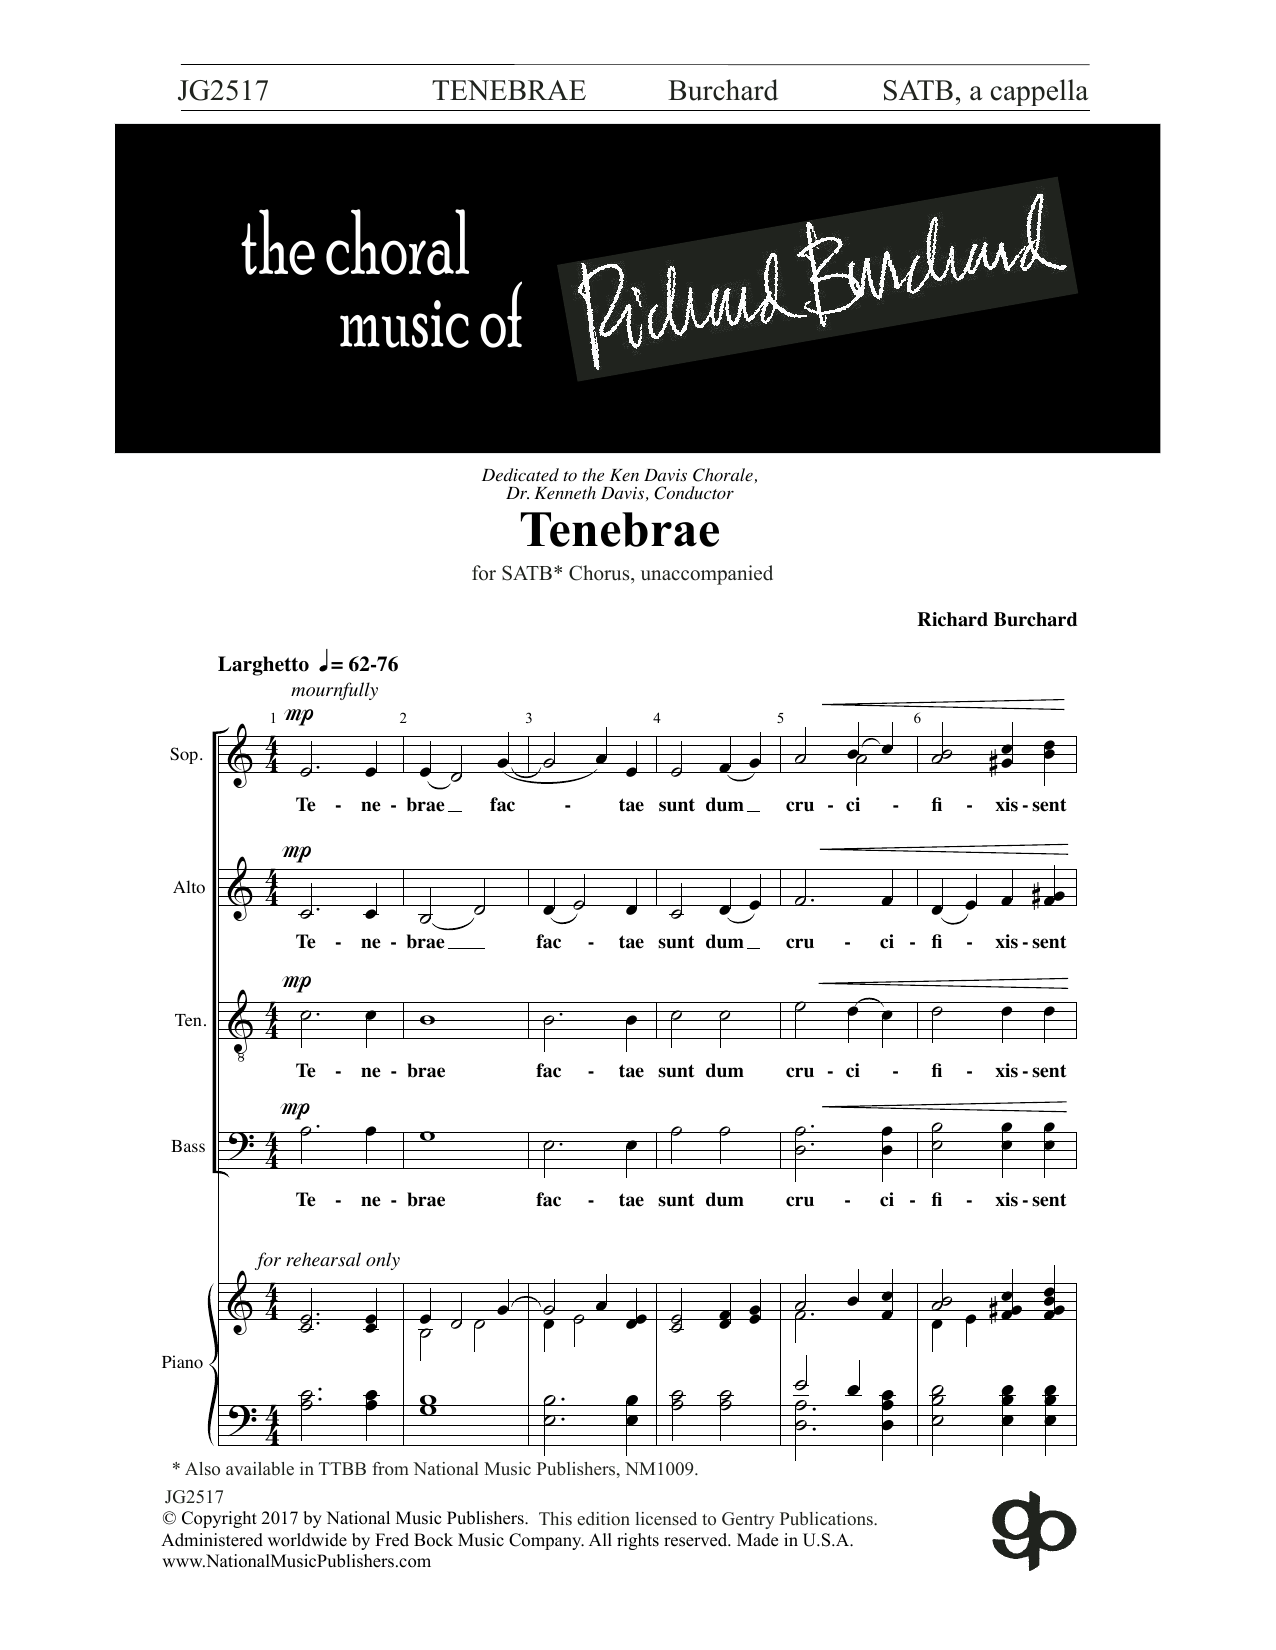 Richard Burchard Tenebrae Sheet Music Notes & Chords for Choral - Download or Print PDF